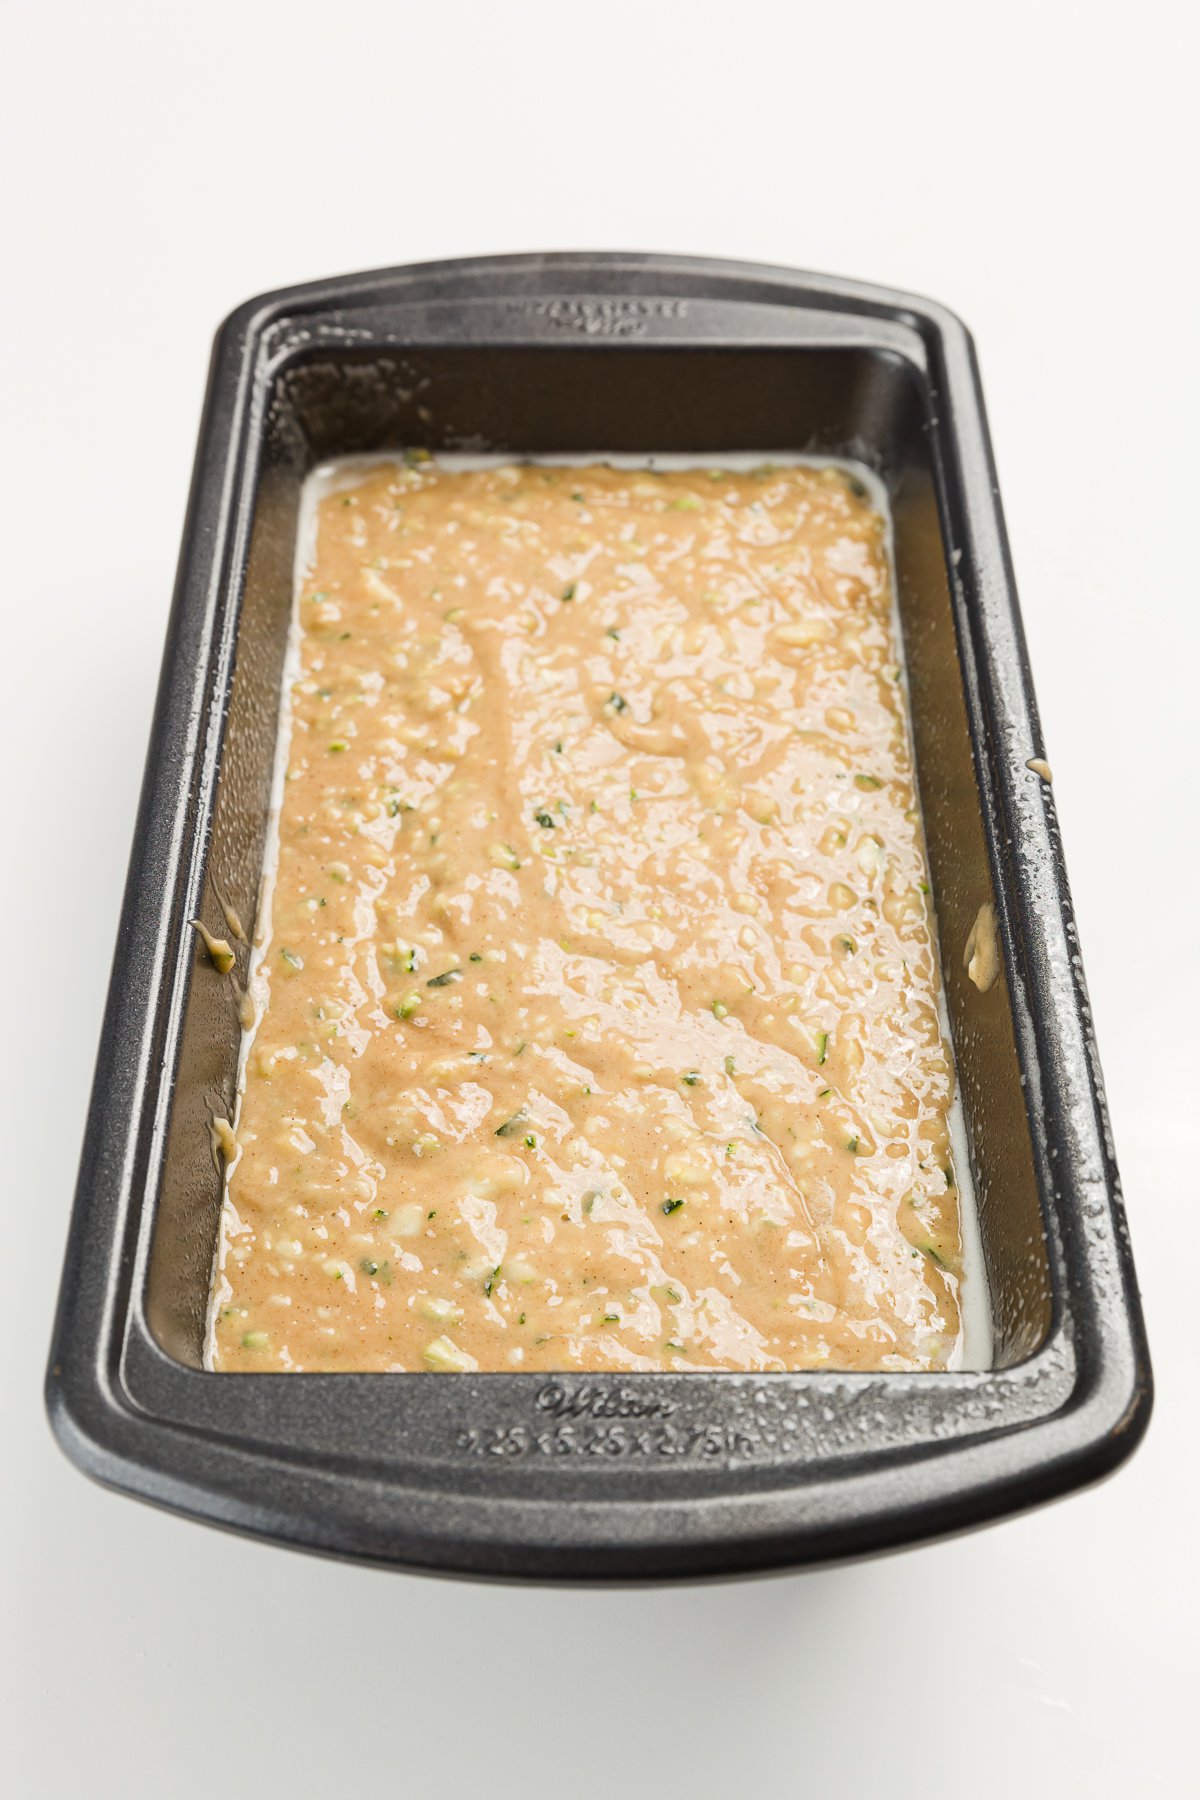 Zucchini Bread batter in a metal loaf pan